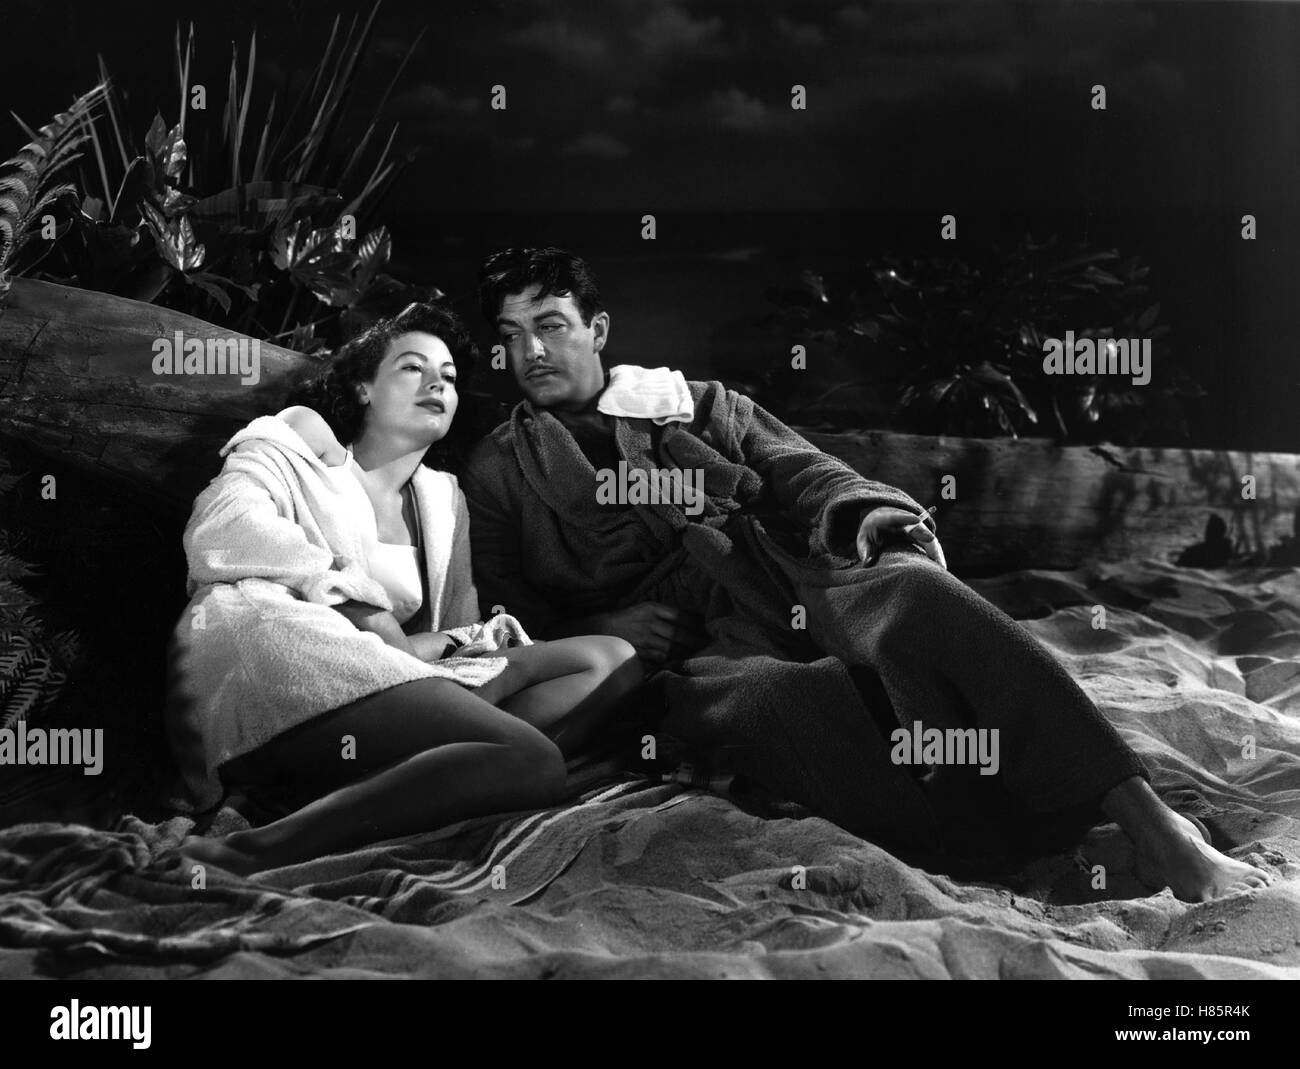 Geheimaktion Carlotta, (tangenti) USA 1949 s/w, Regie: Robert Z. Leonard, Ava Gardner, ROBERT TAYLOR, Stichwort: Strand, romanze Foto Stock